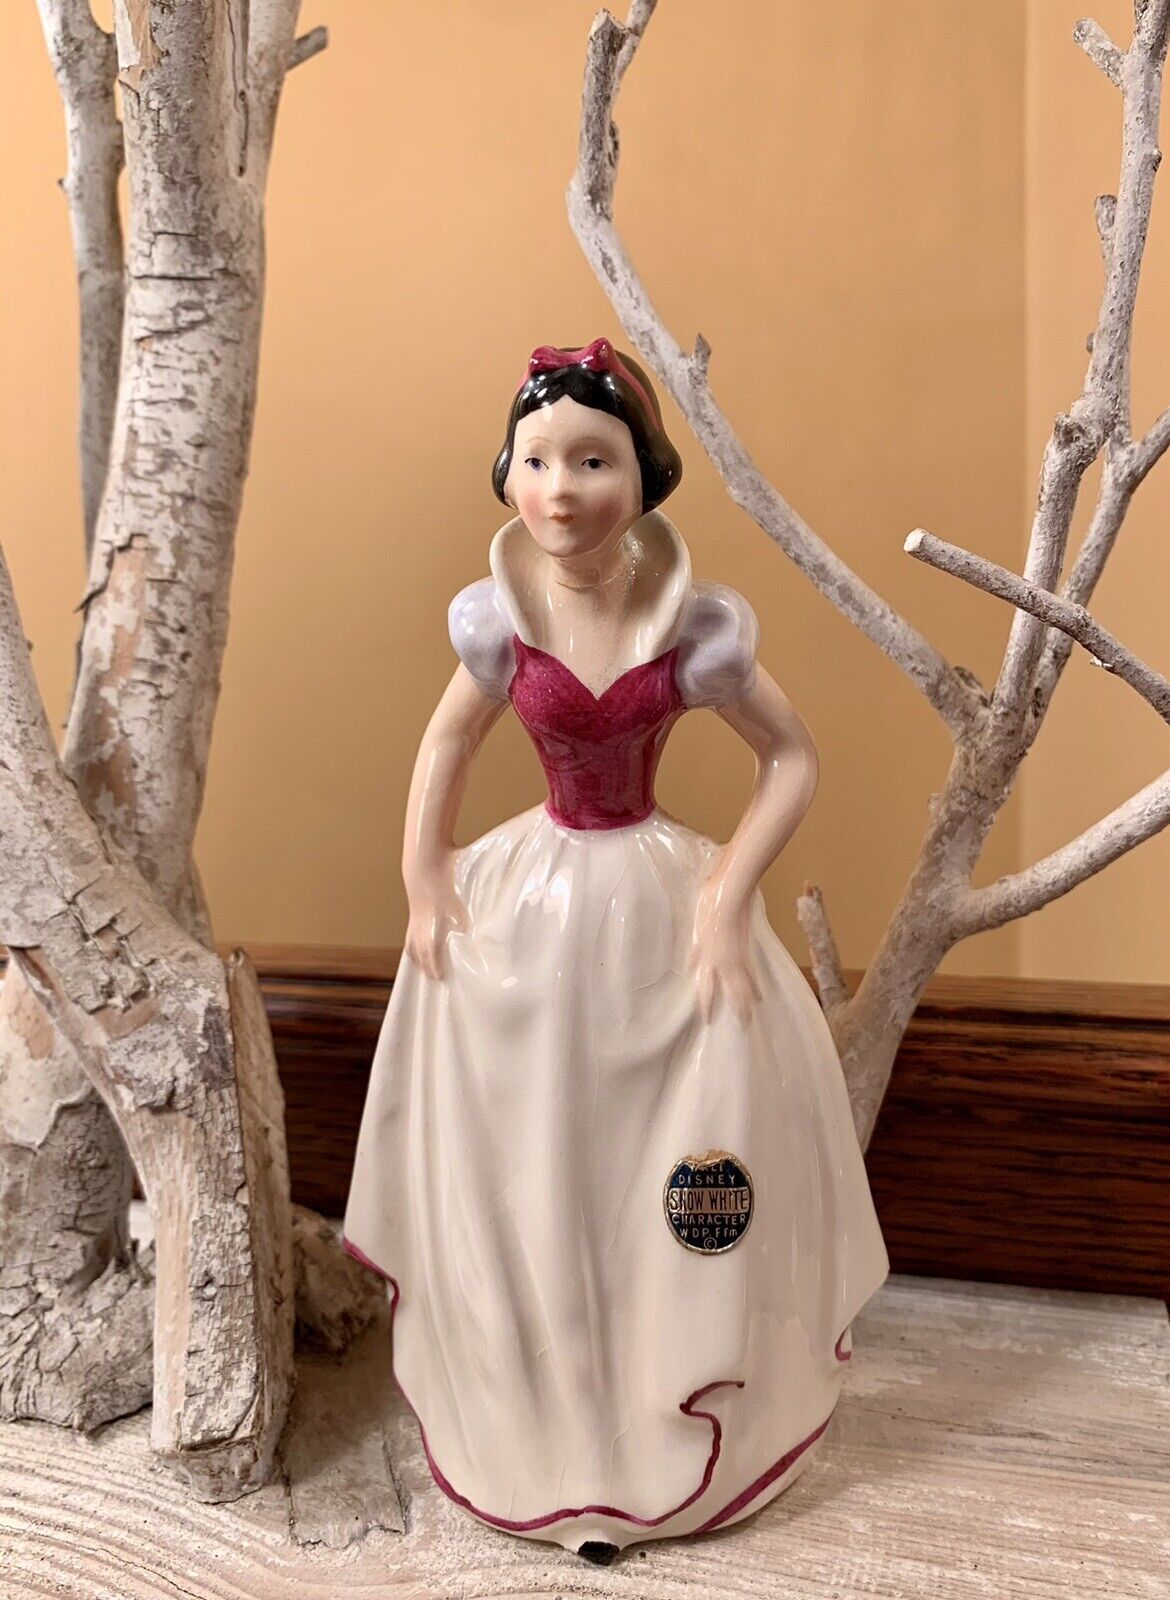 Disney Goebel 1950-1955 SNOW WHITE 5.7” Ceramic Figurine: Made in Germany 🇩🇪